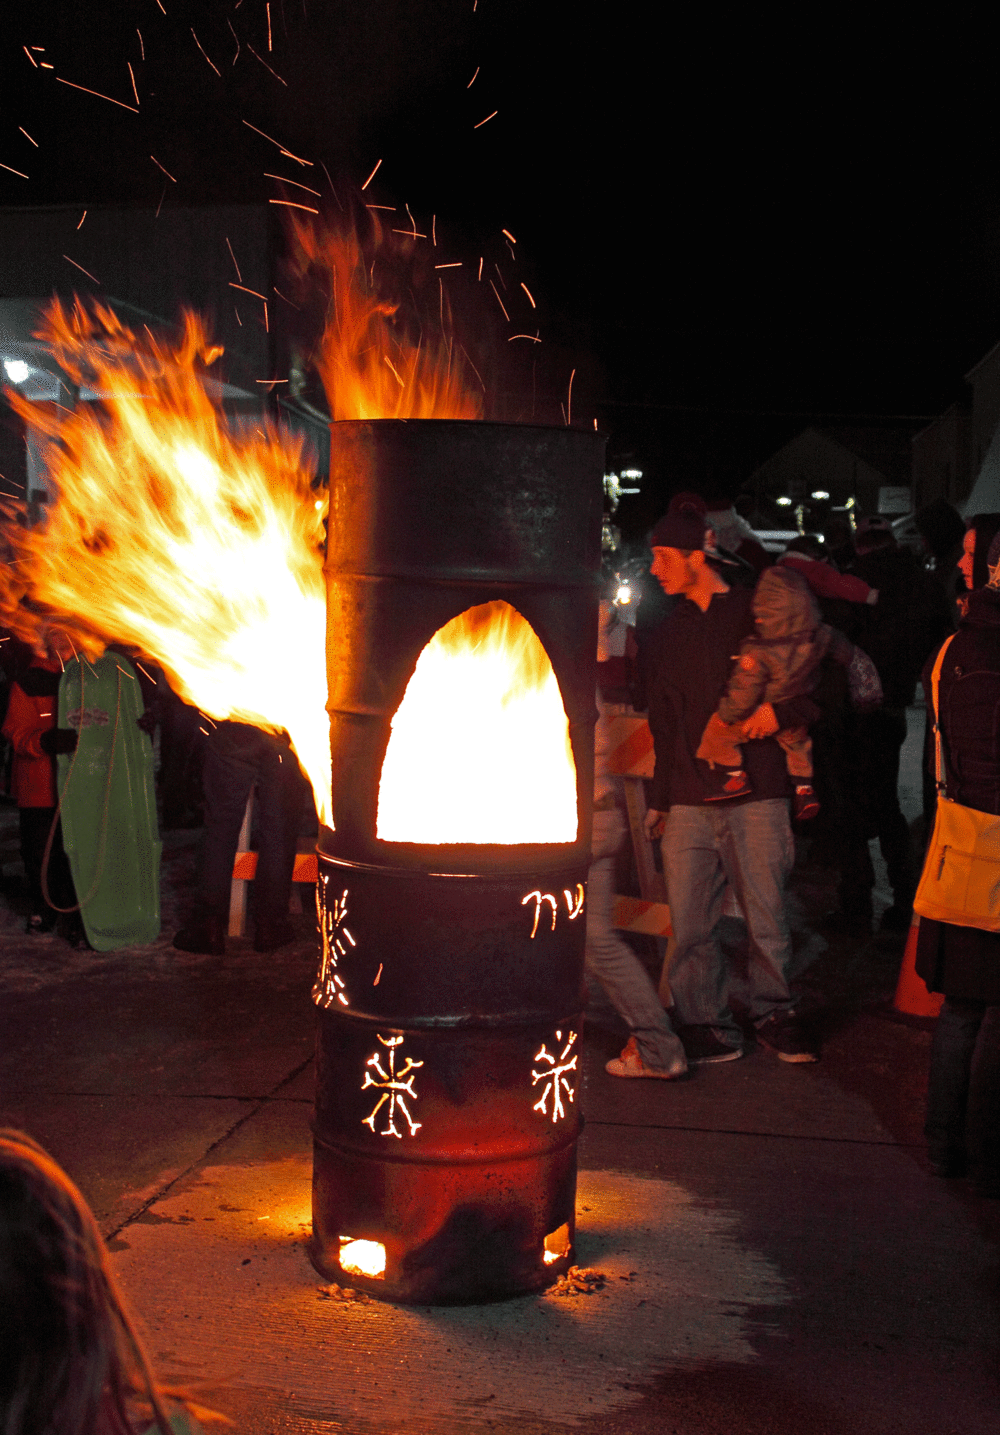 A toasty warm fire on a snowy evening.